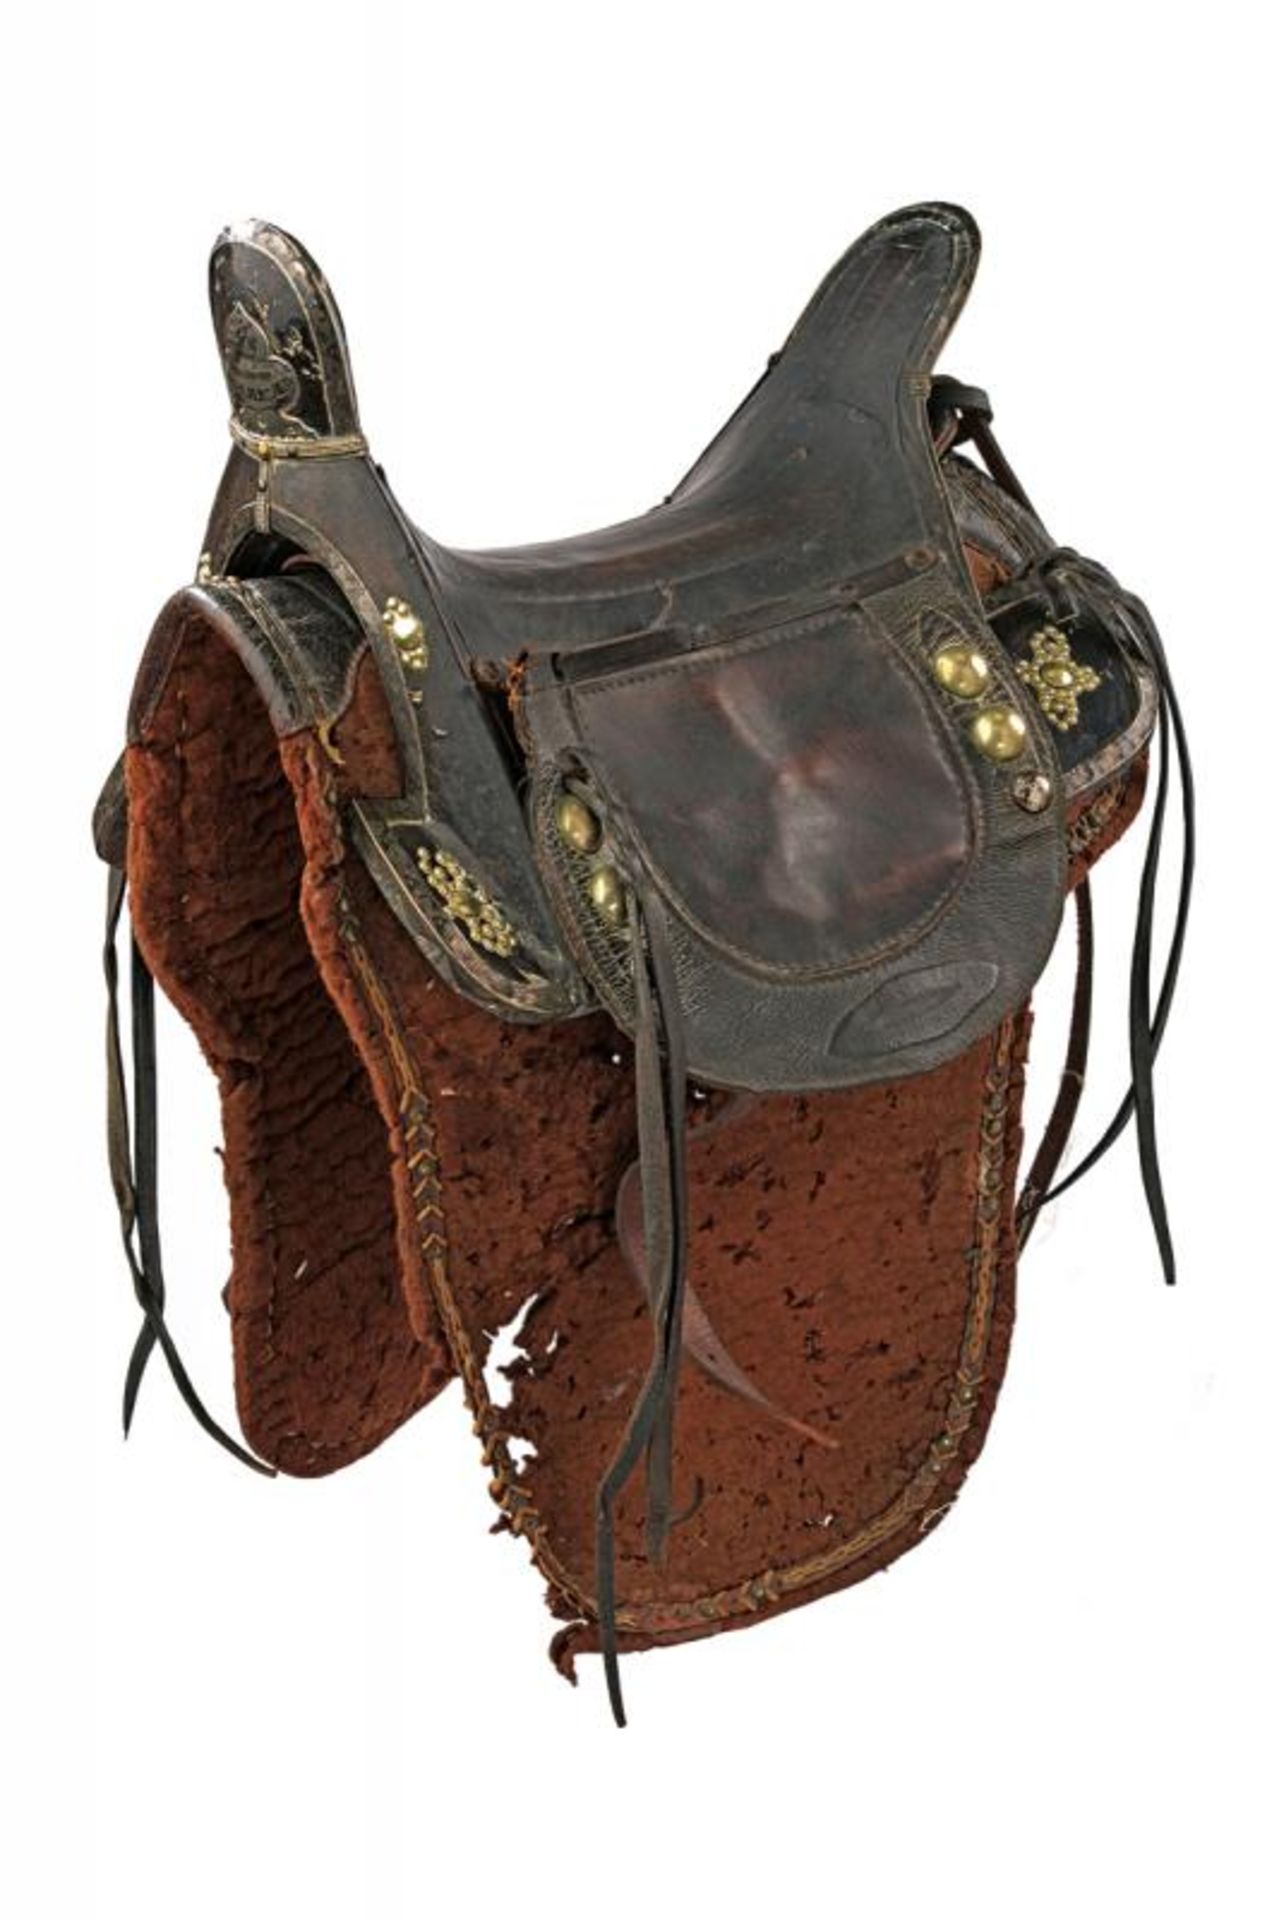 A silver-nielloed mounted saddle